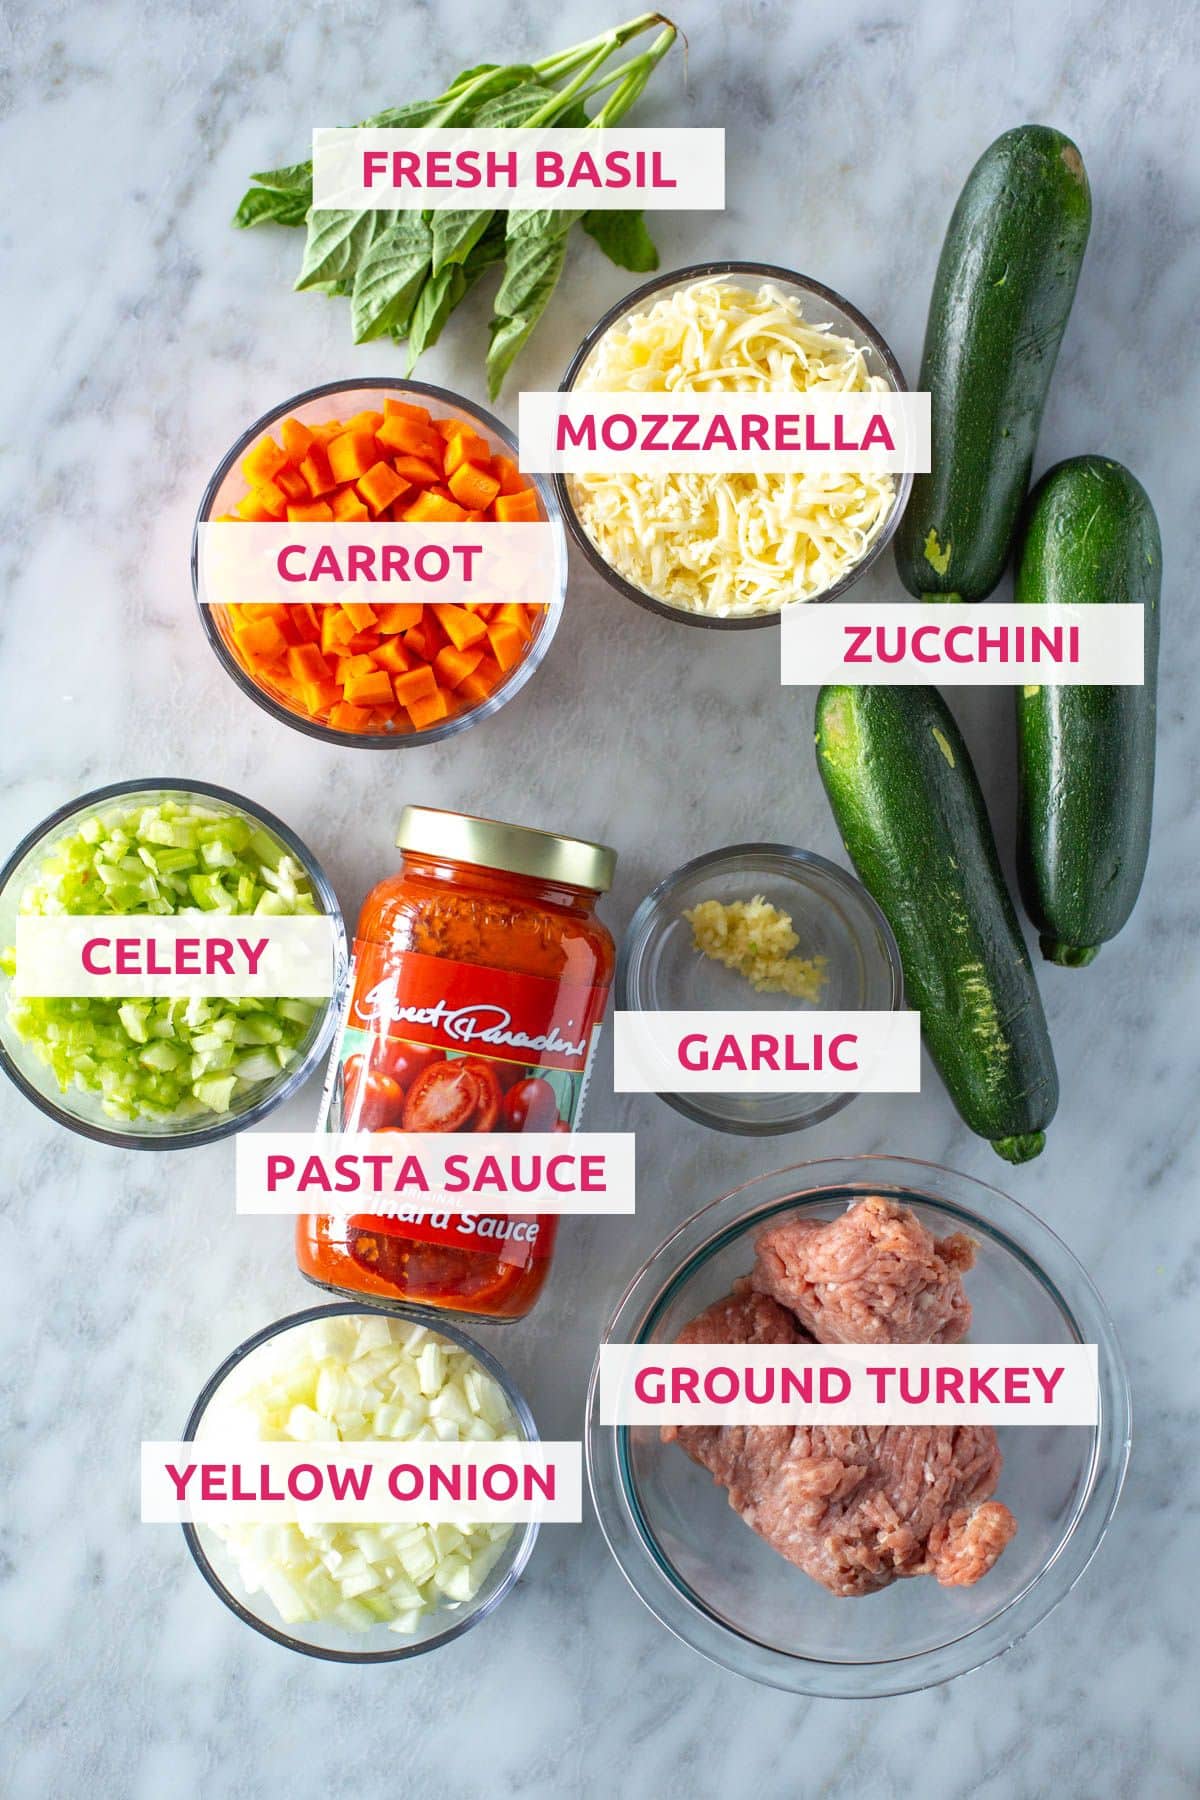 Ingredients for Italian stuffed zucchini boats: fresh basil, mozzarella, carrot, zucchini, celery, pasta sauce, garlic, yellow onion and ground turkey